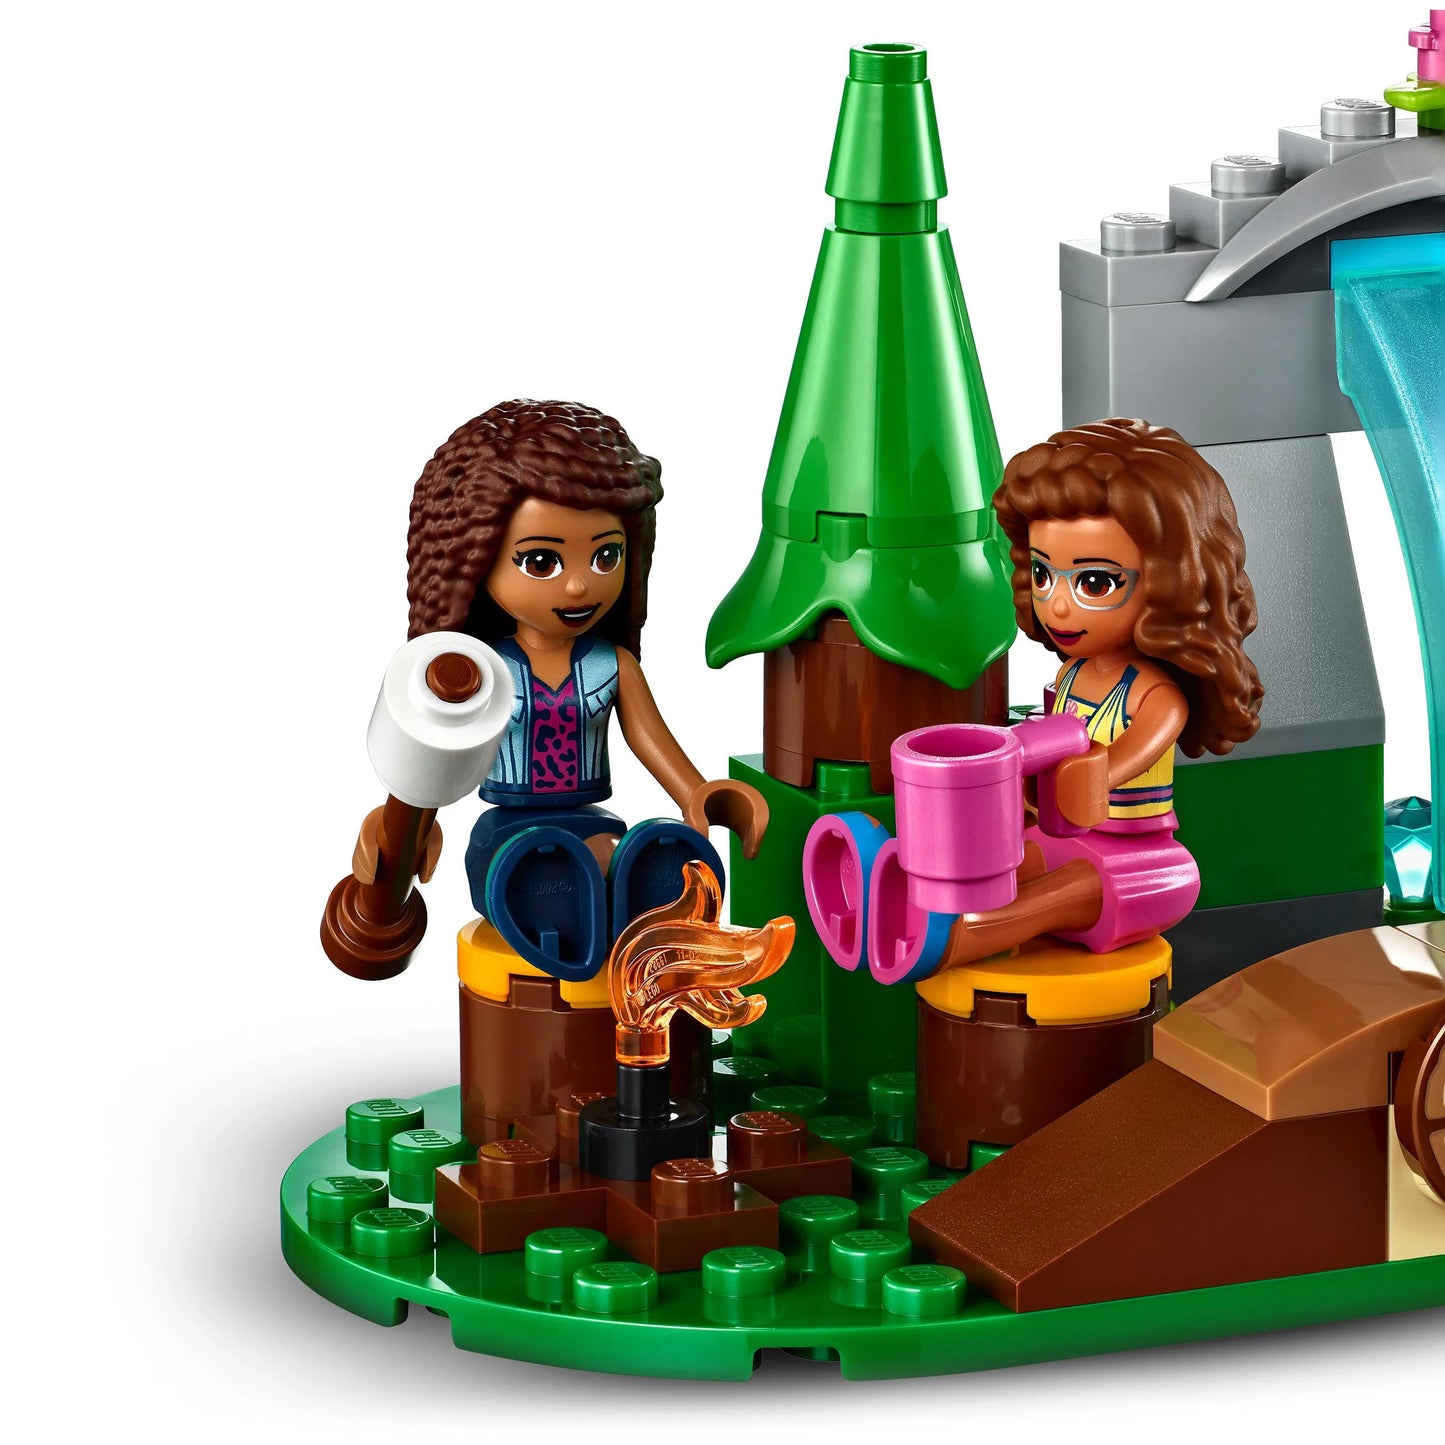 Waterval in het bos-LEGO Friends